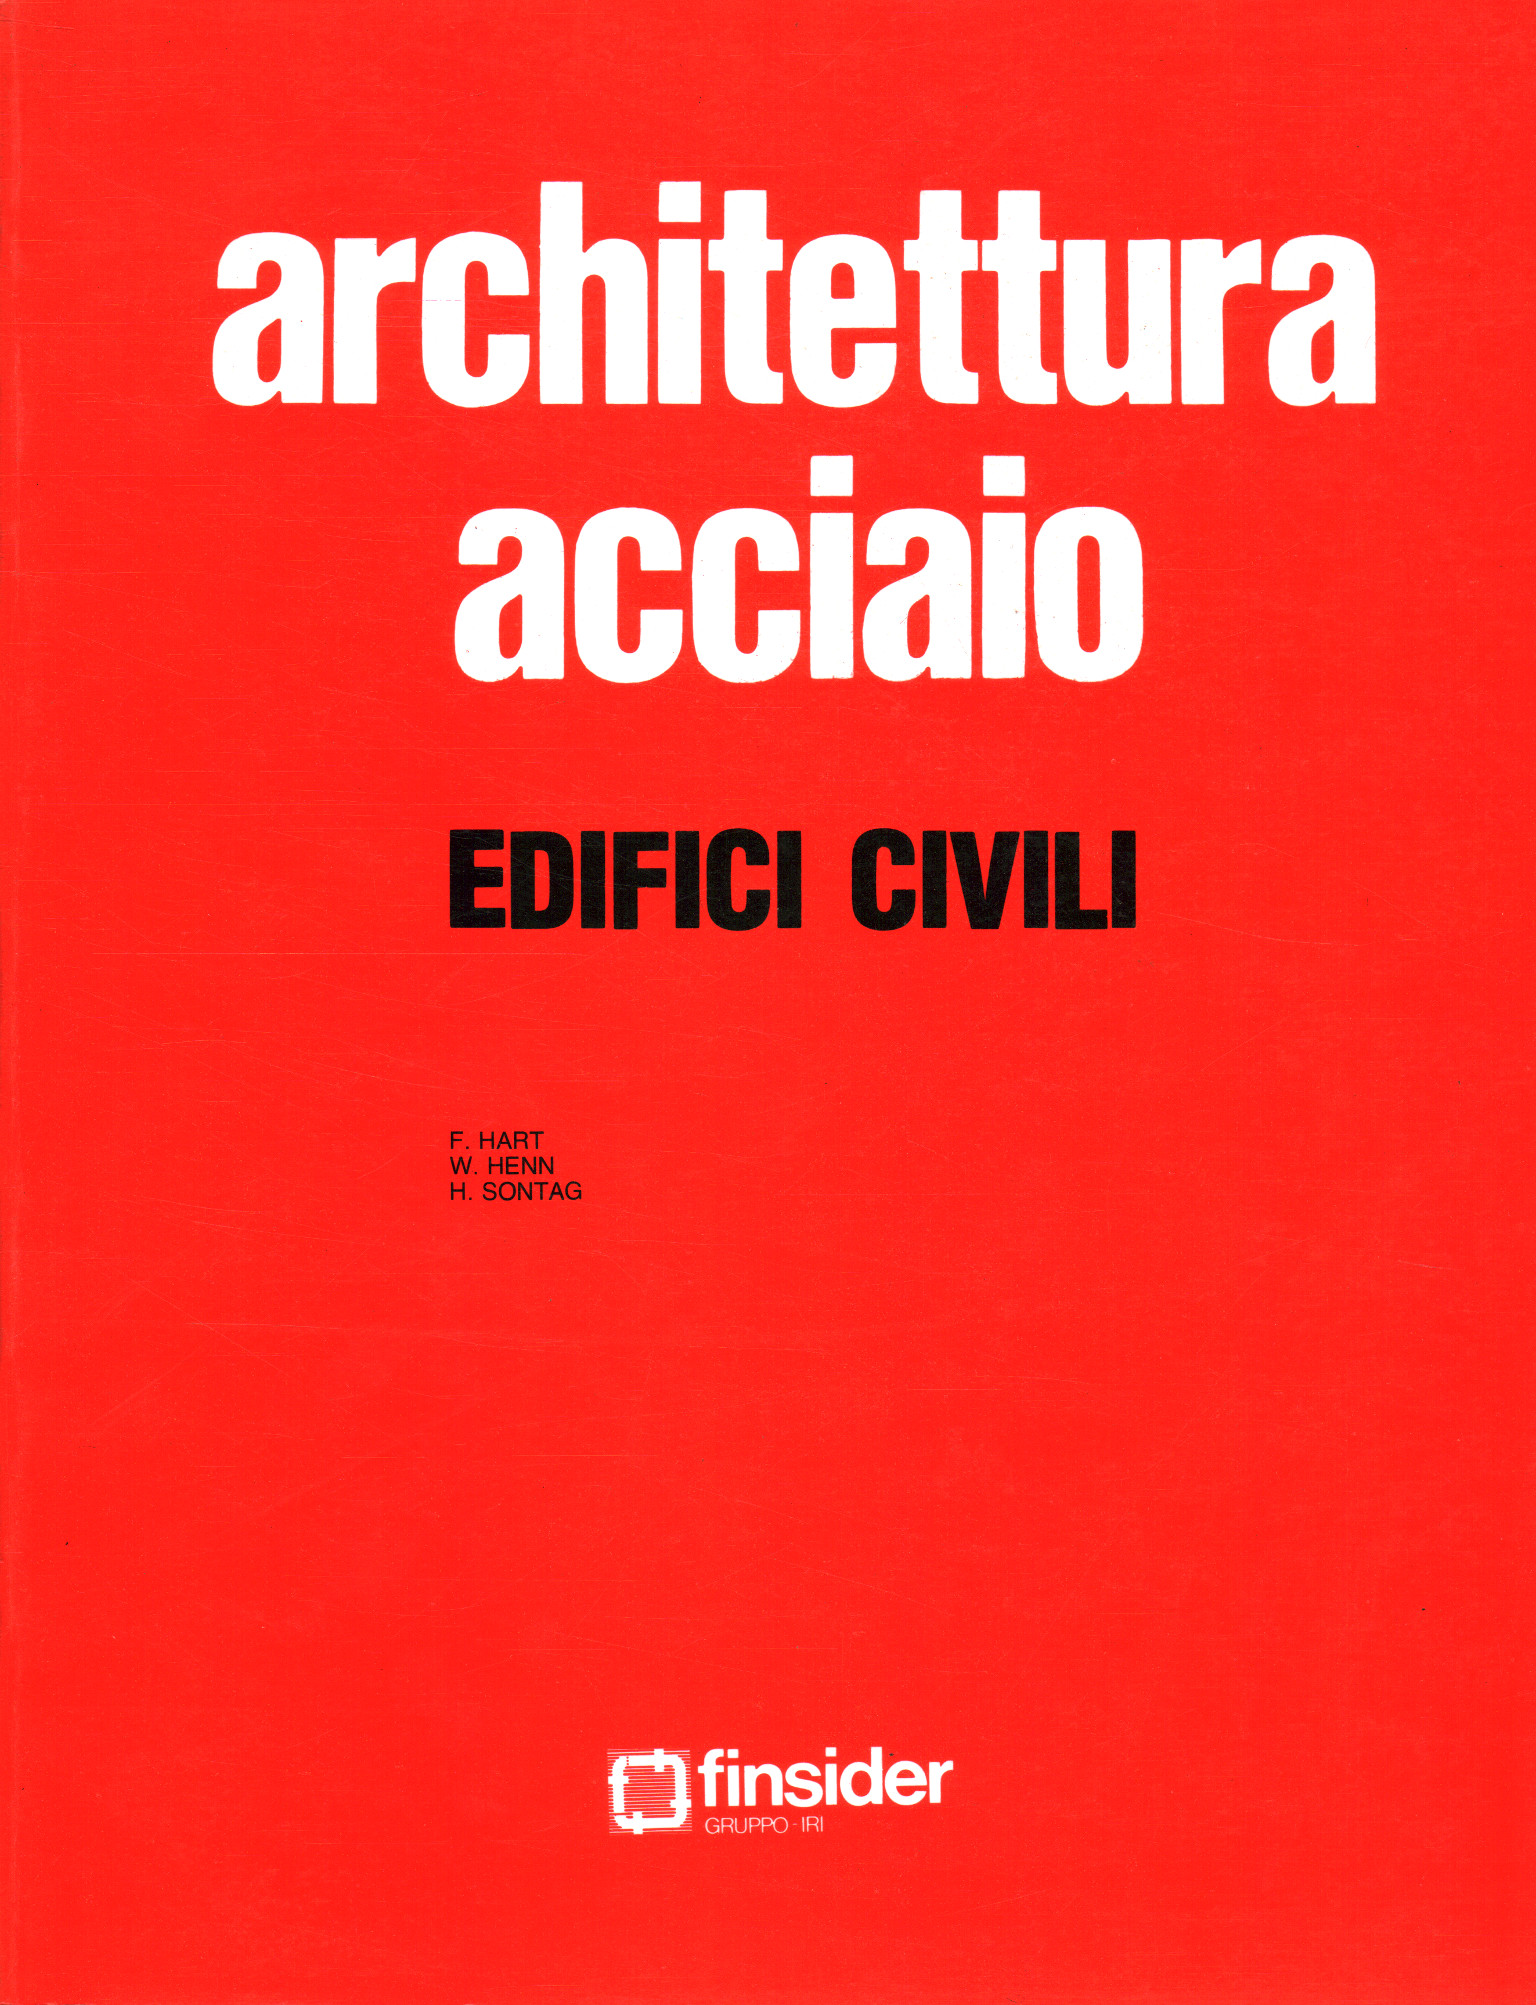 Architettura acciaio. Edifici civili, F. Hart W. Henn H. Sontag